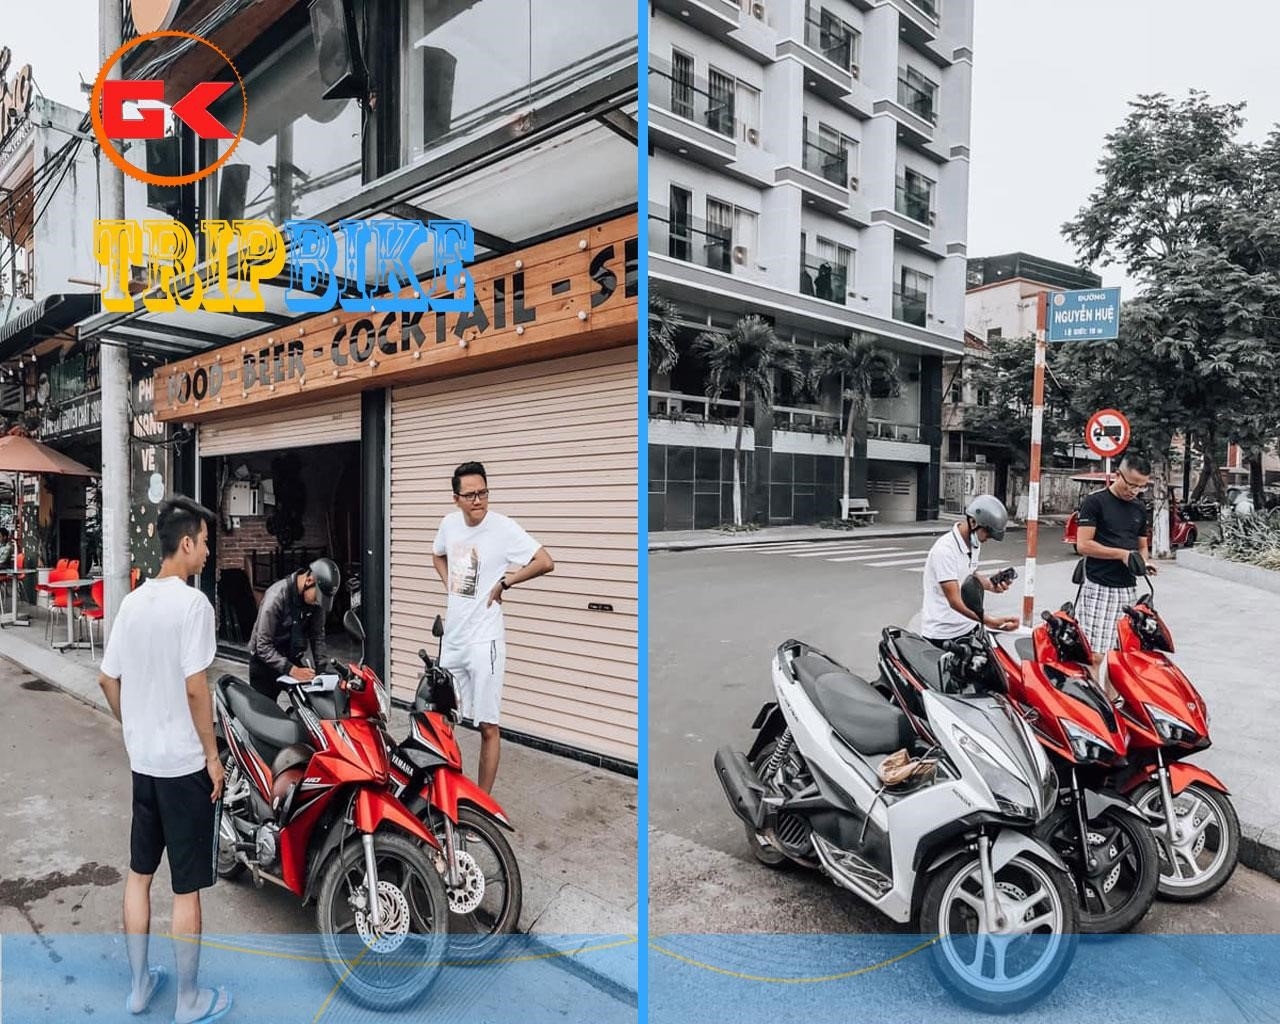 Quy Nhon Hoai Bao motorcycle rental.